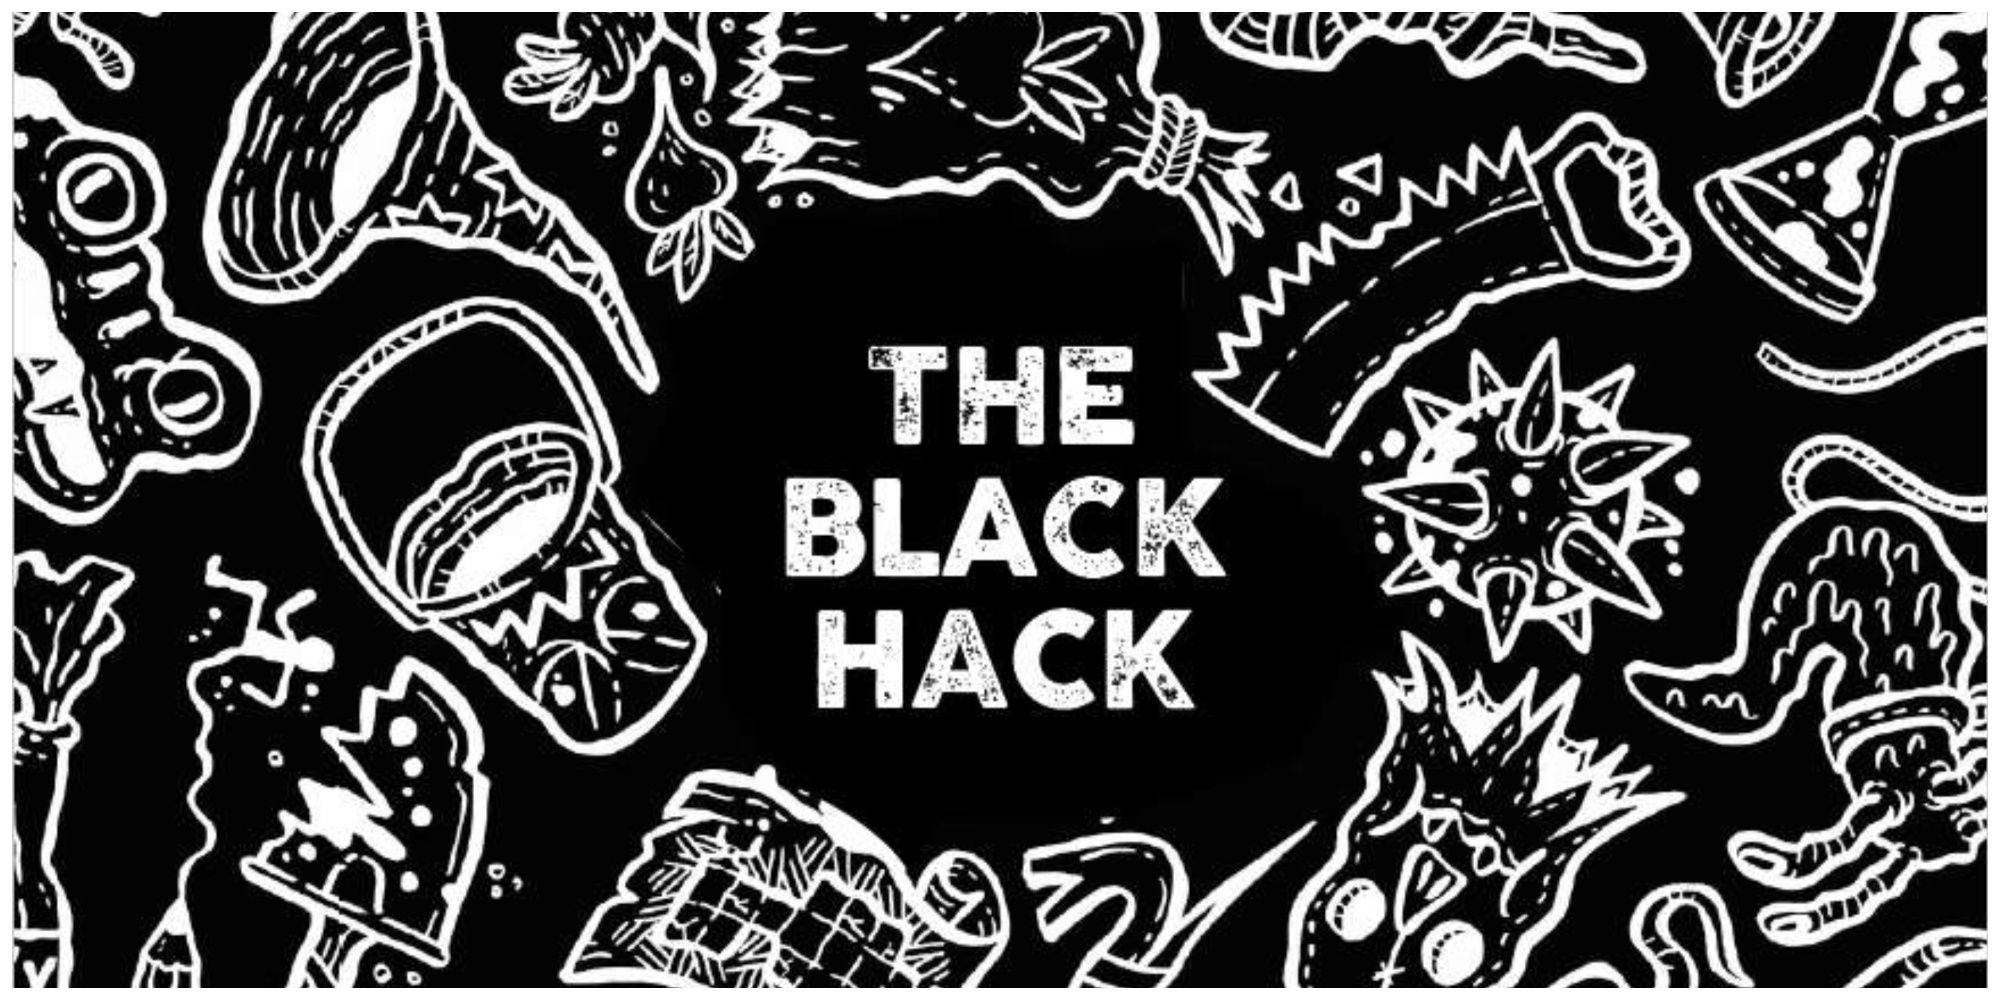 The Black Hack title